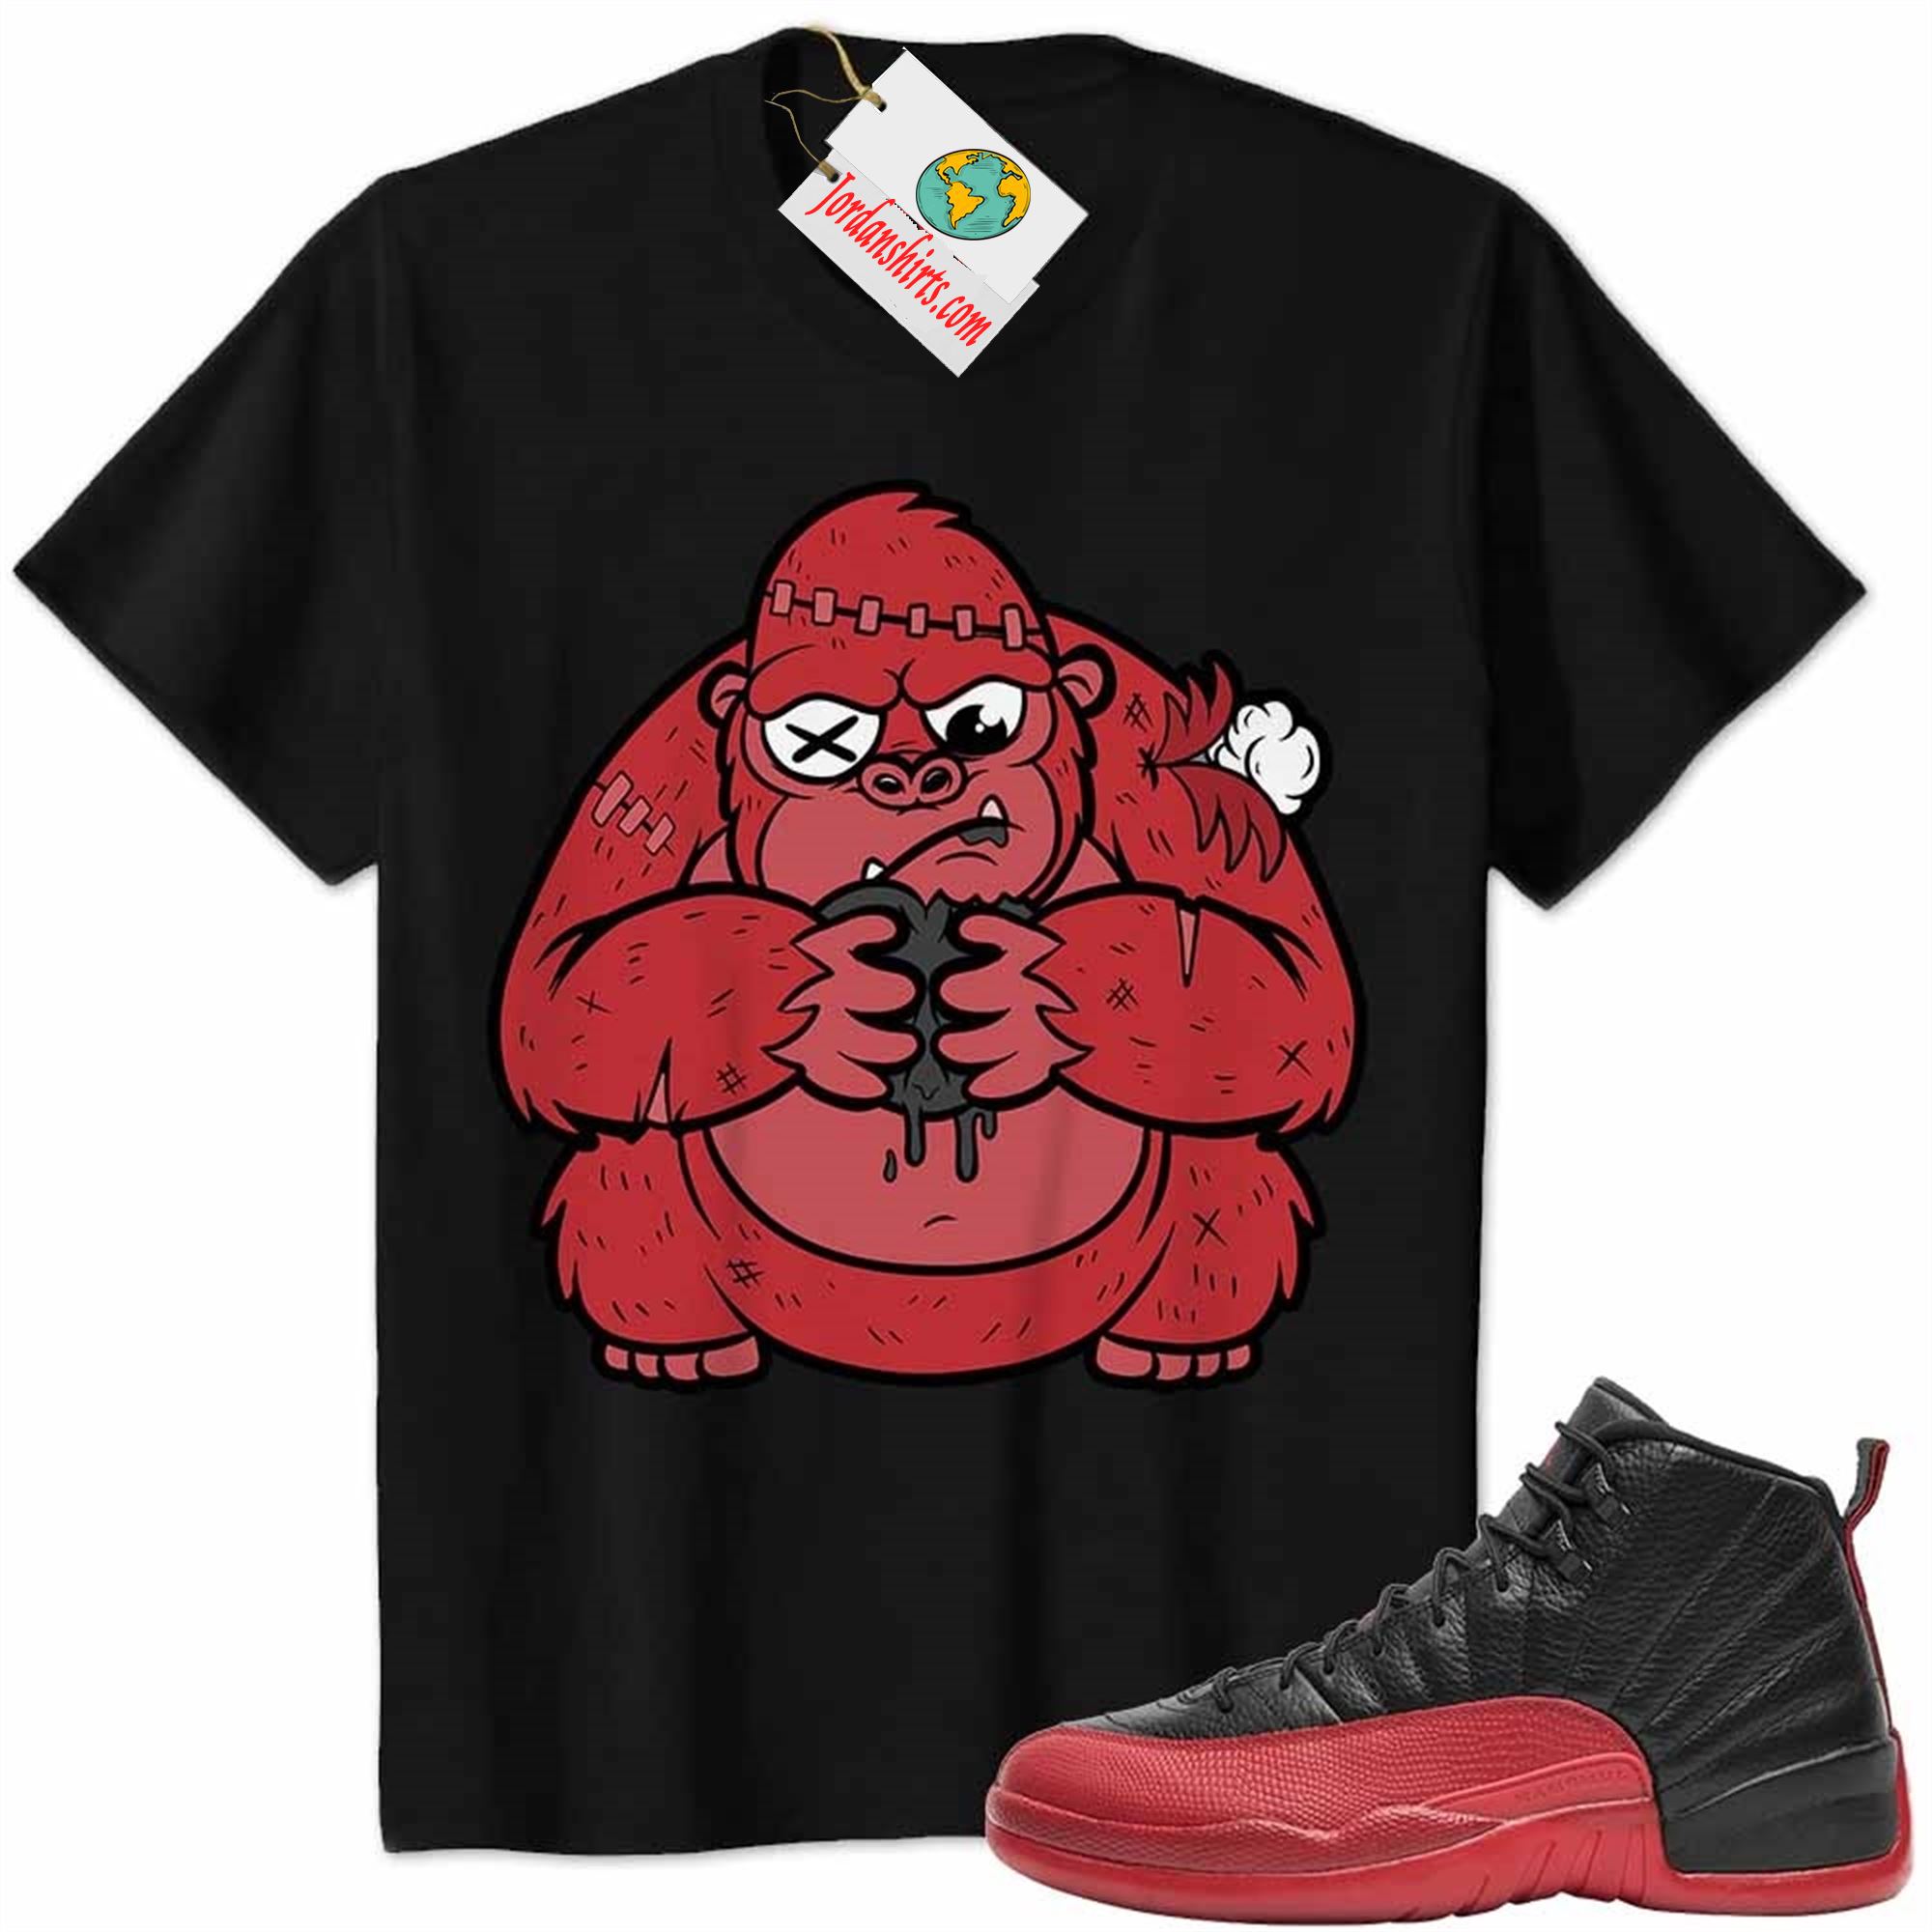 Jordan 12 Shirt, Cute Monkey Broken Heart Black Air Jordan 12 Flu Game 12s Size Up To 5xl